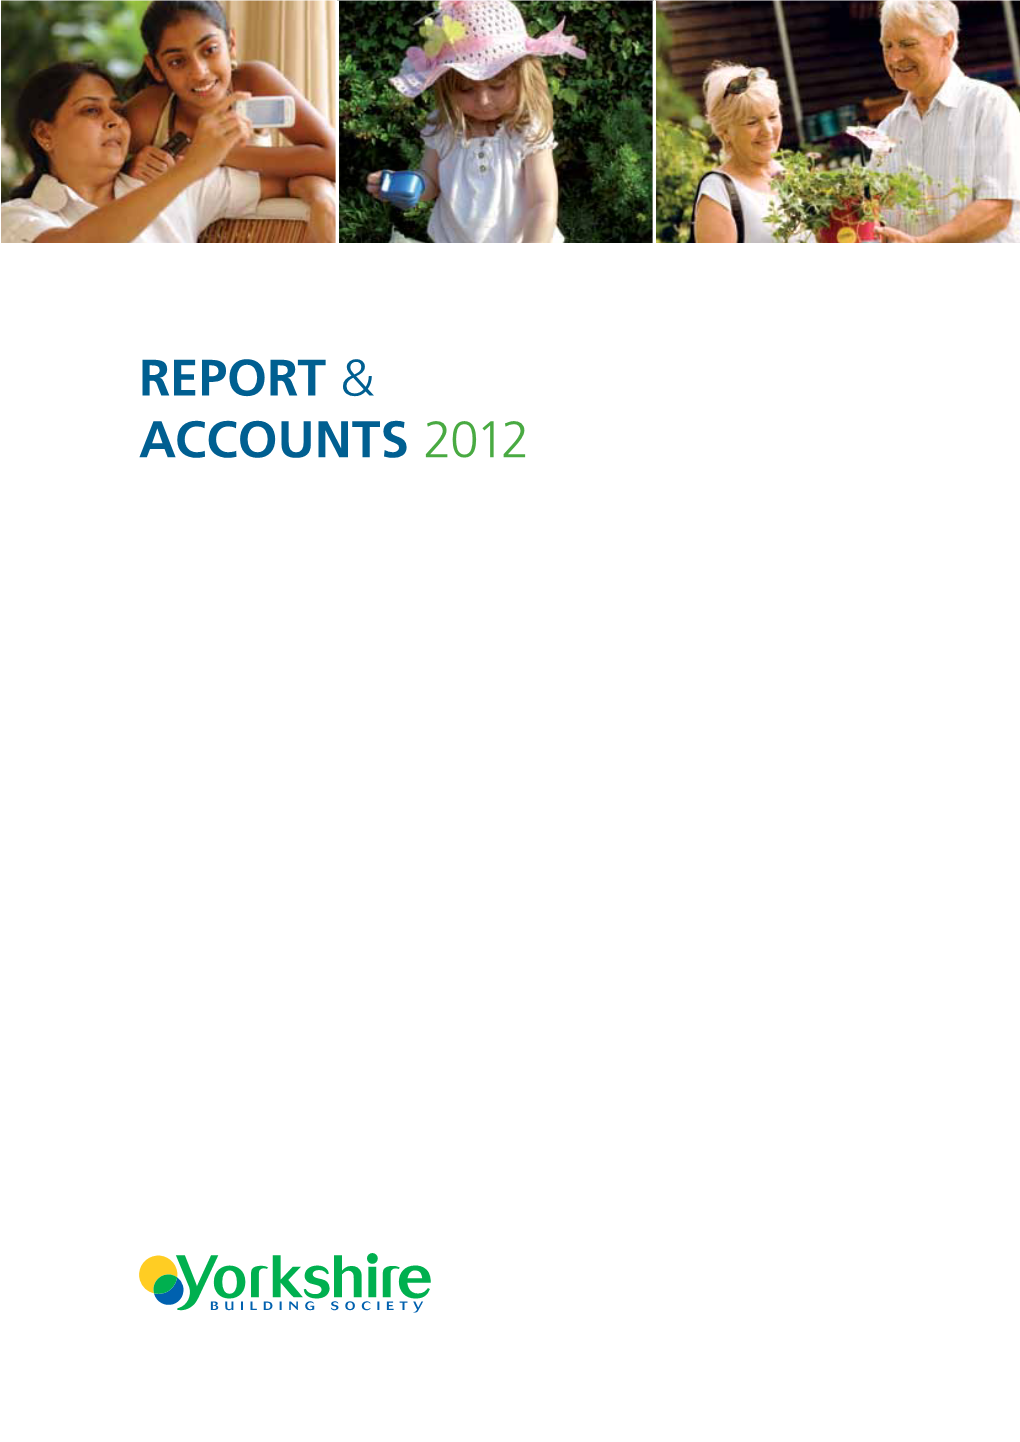 Report & Accounts 2012